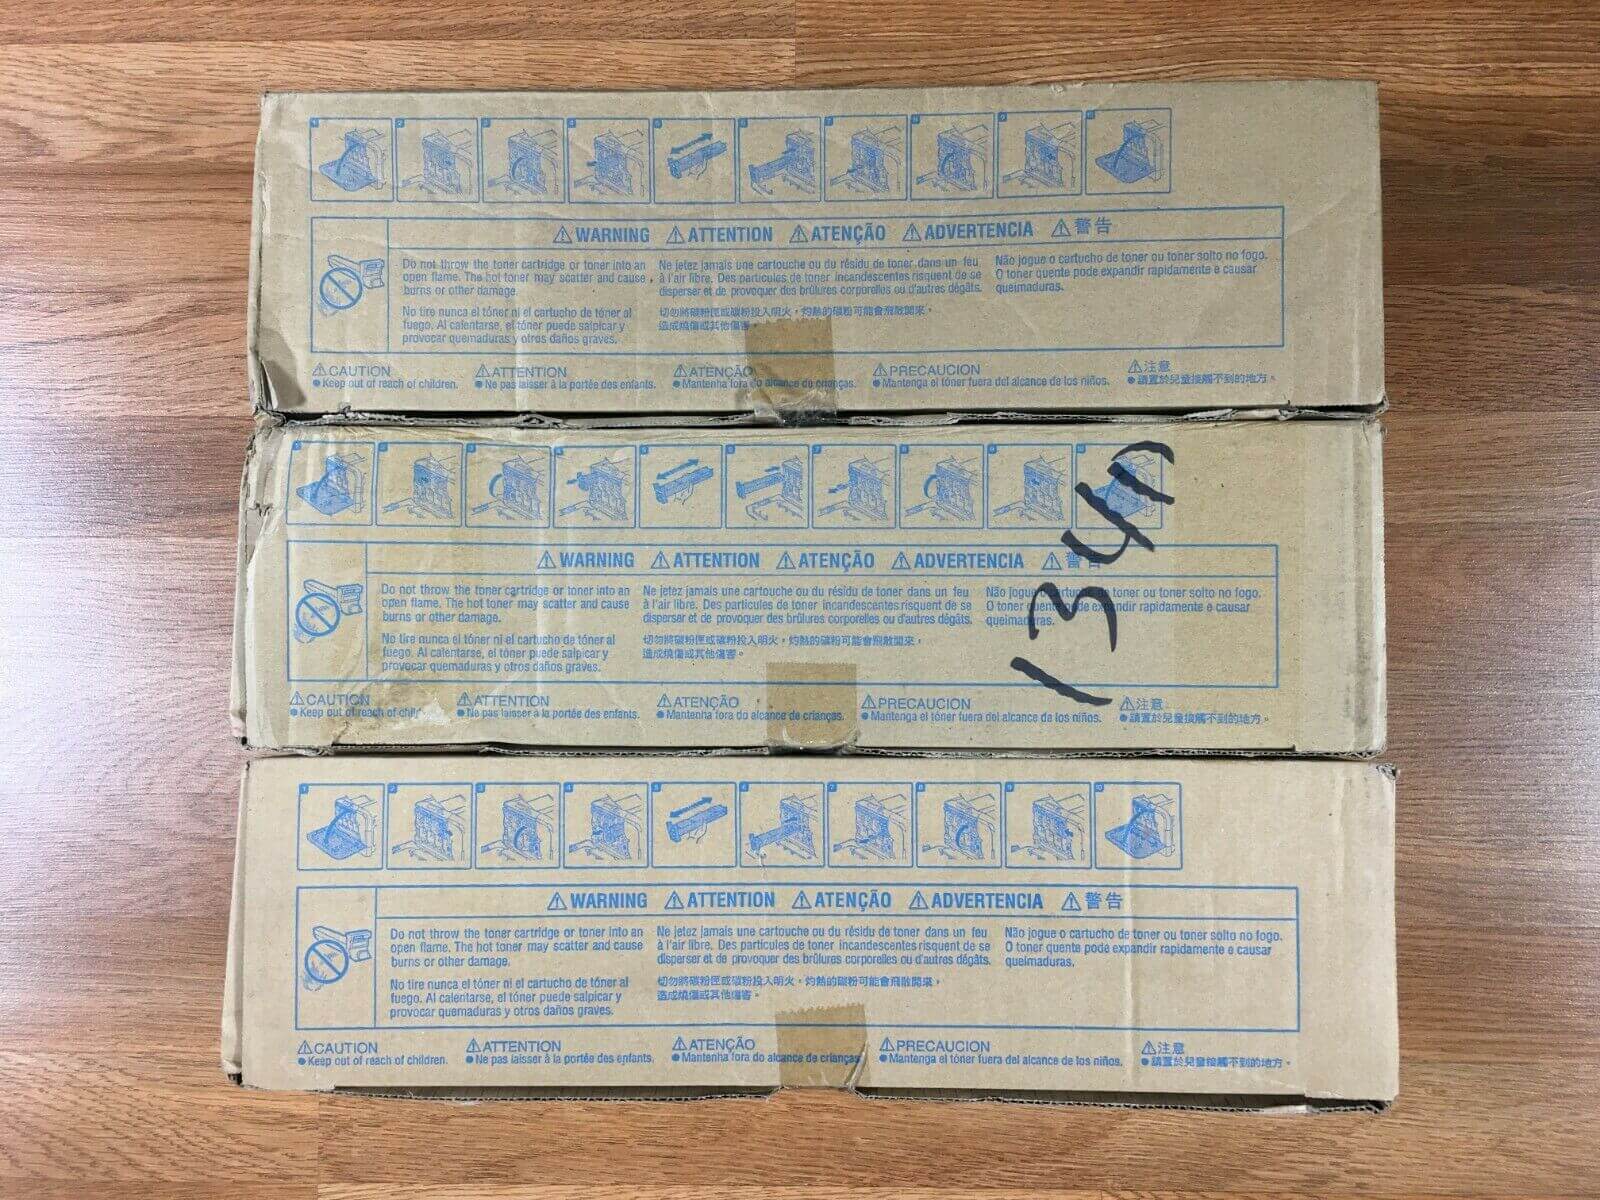 Lot of 3 Genuine Konica TN318 CYK C20 Series Toner Cartridges - FedEx 2 Day - copier-clearance-center